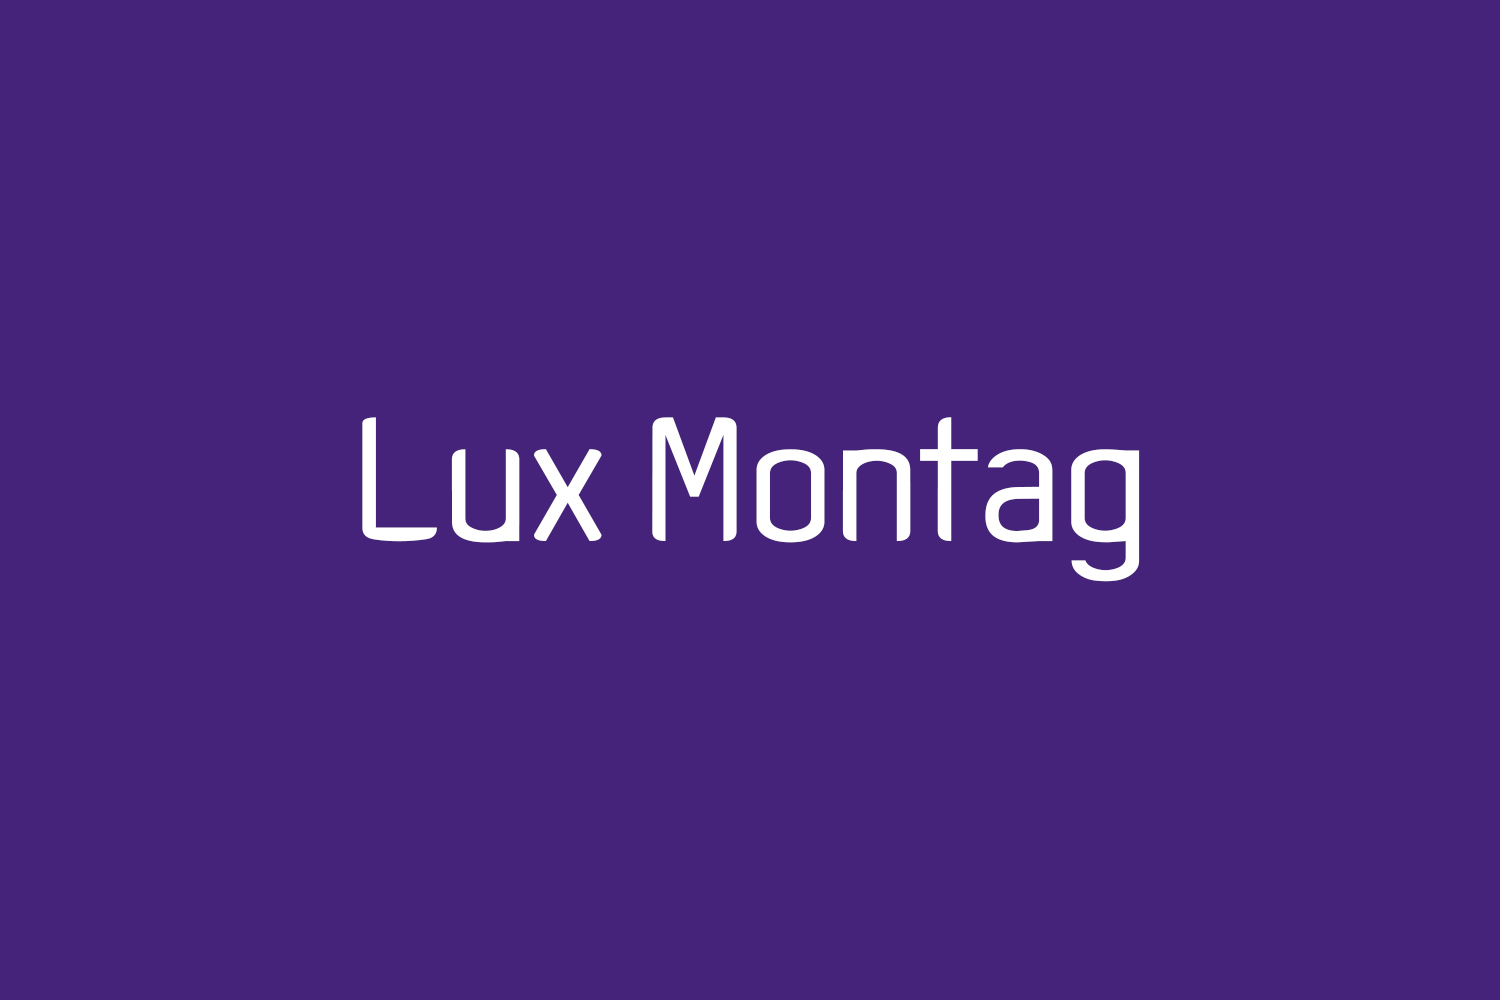 Lux Montag Free Font